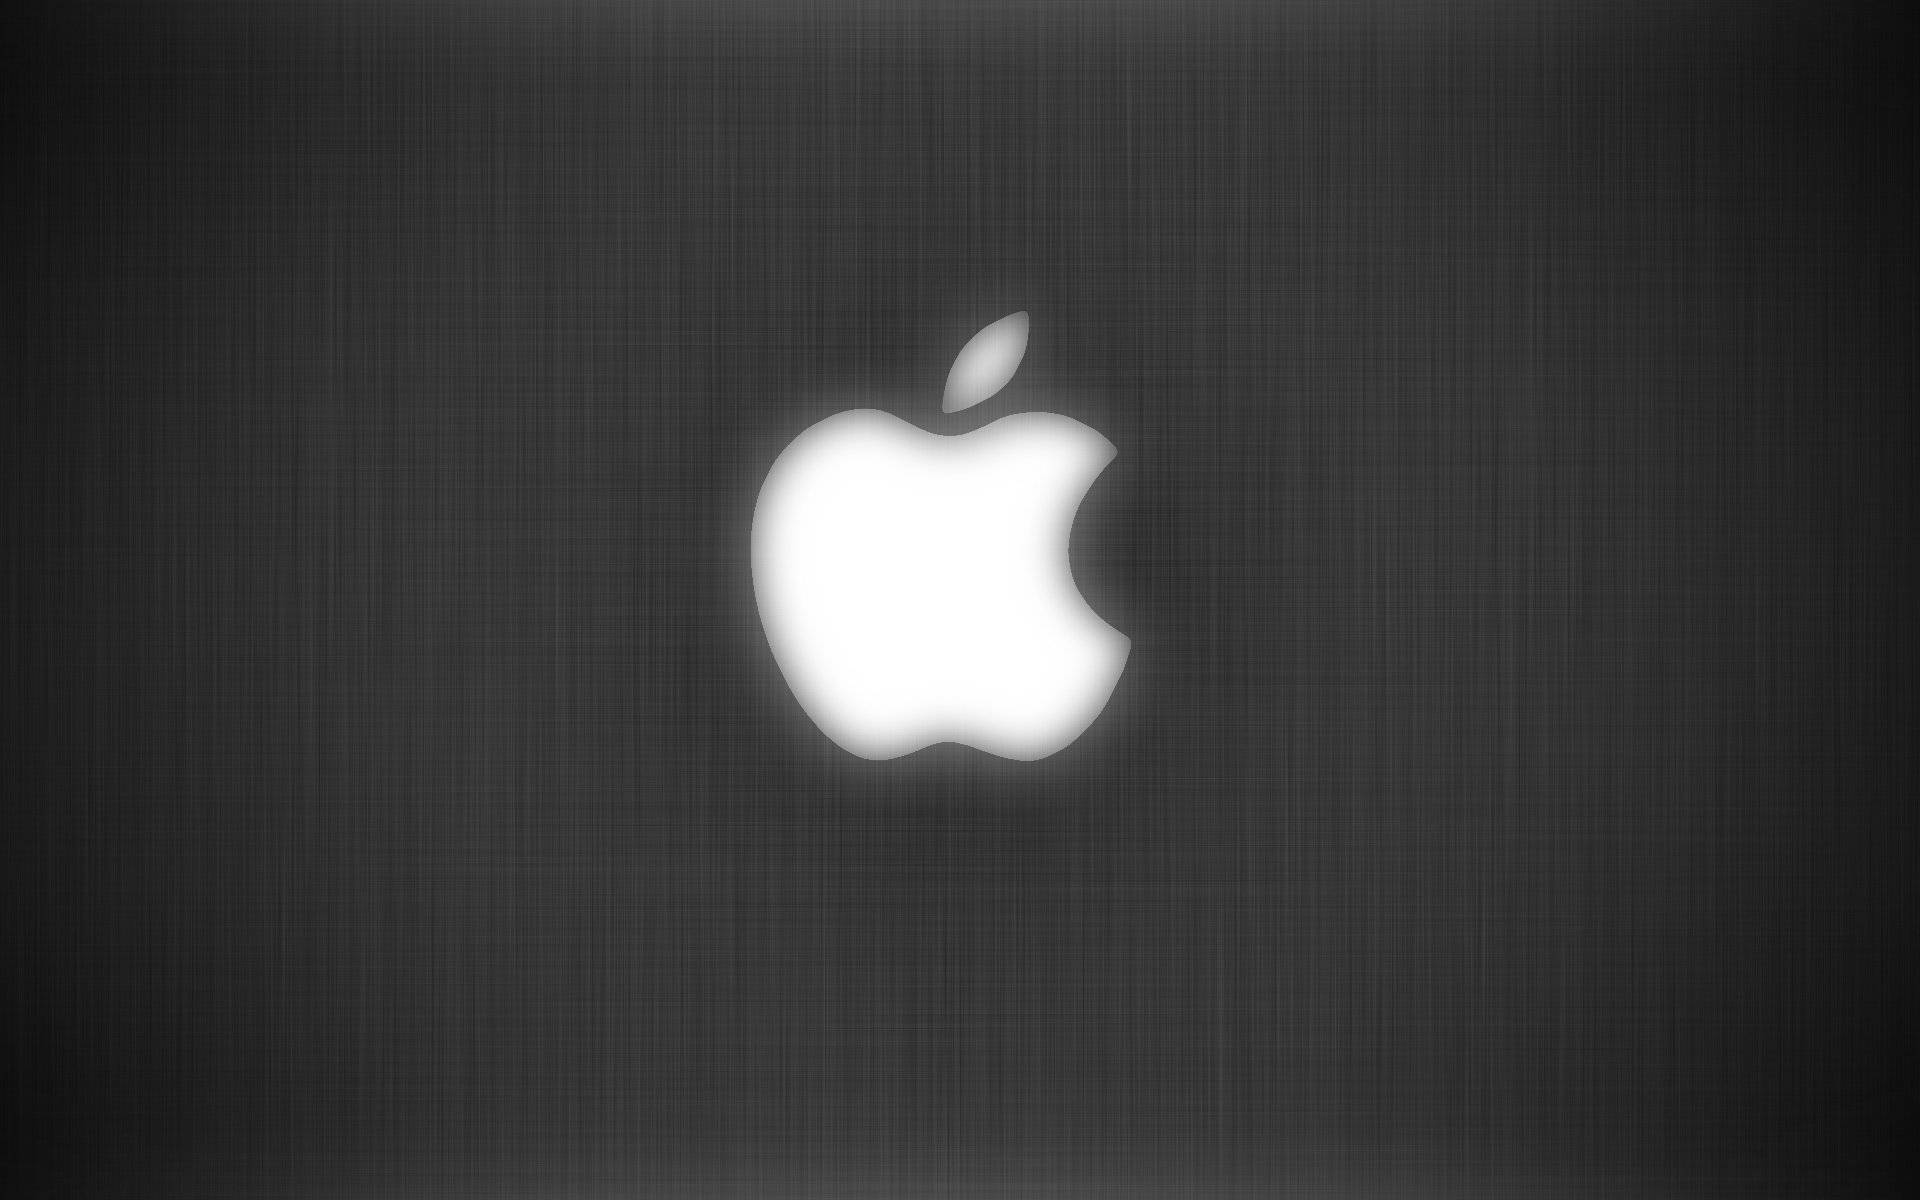 Simple Apple Logo